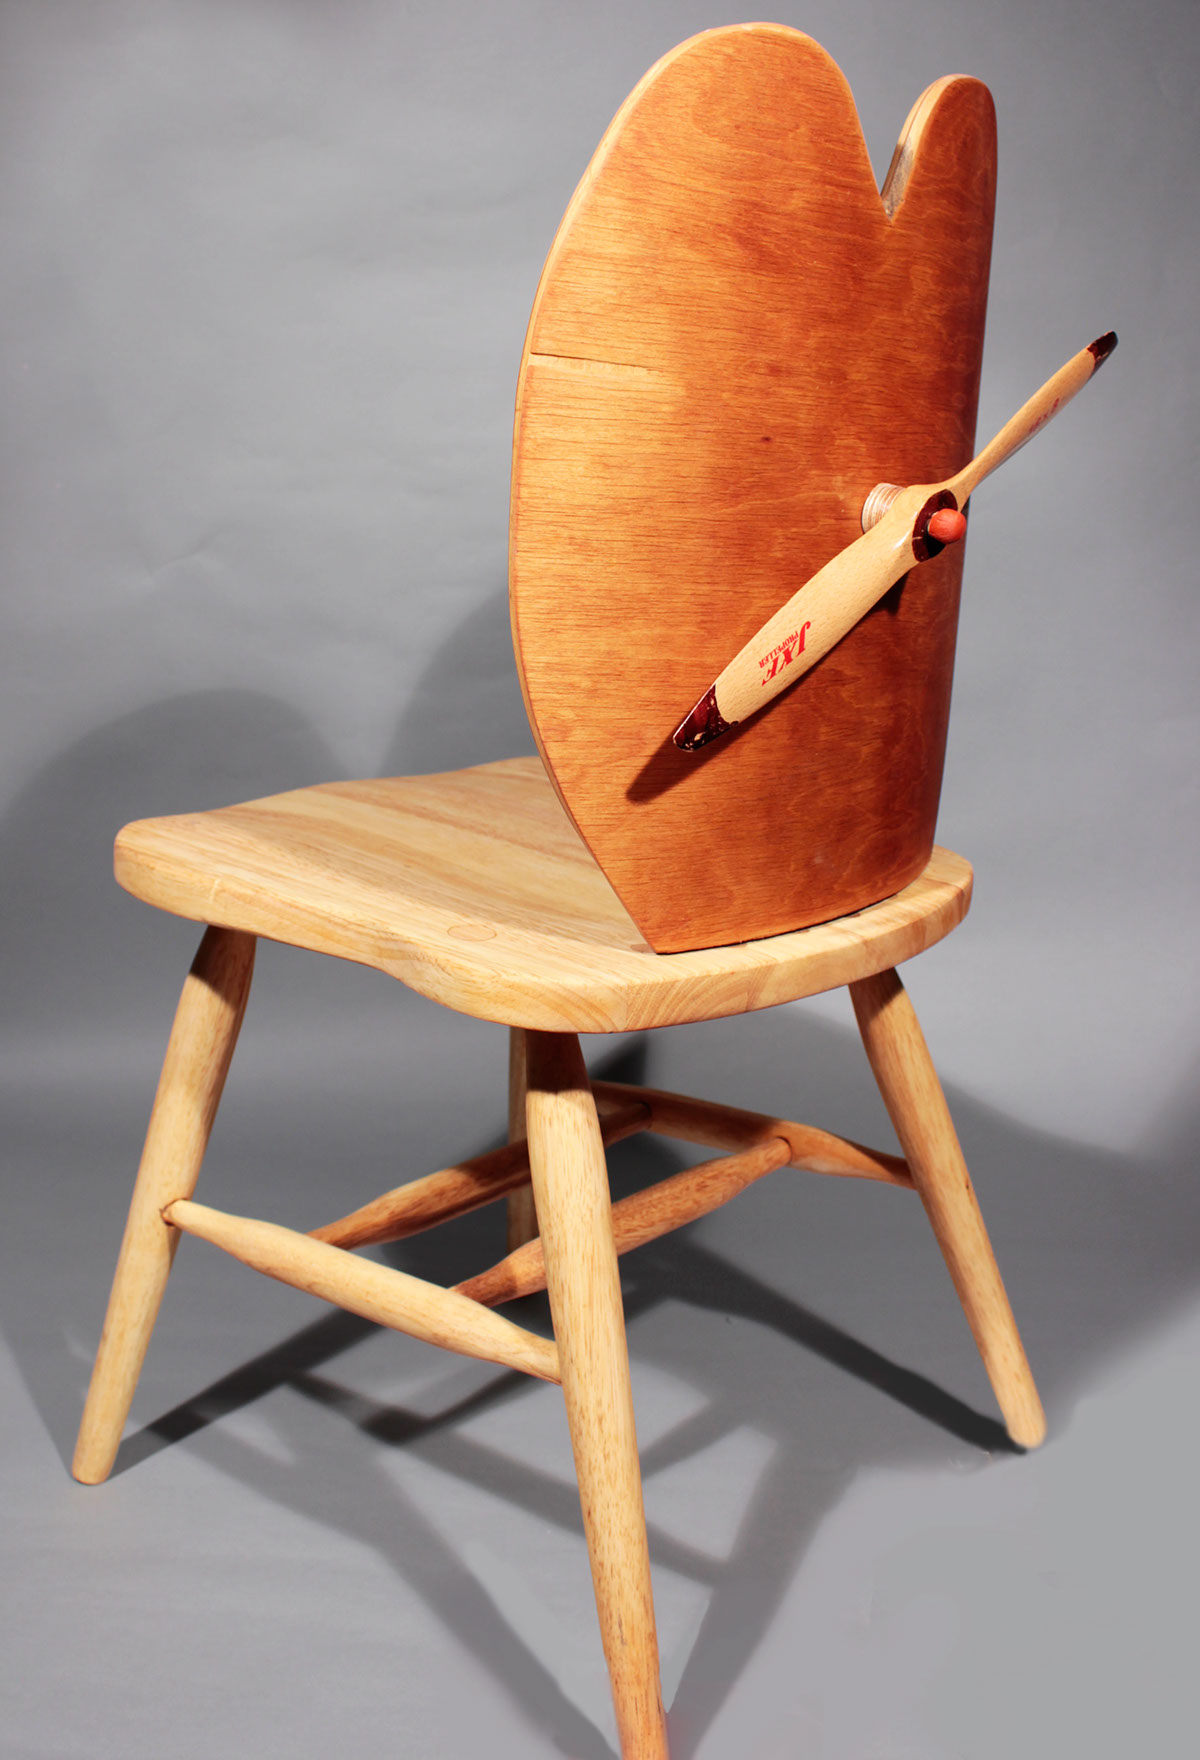 repurposed furniture art found object pinwheel flight chair